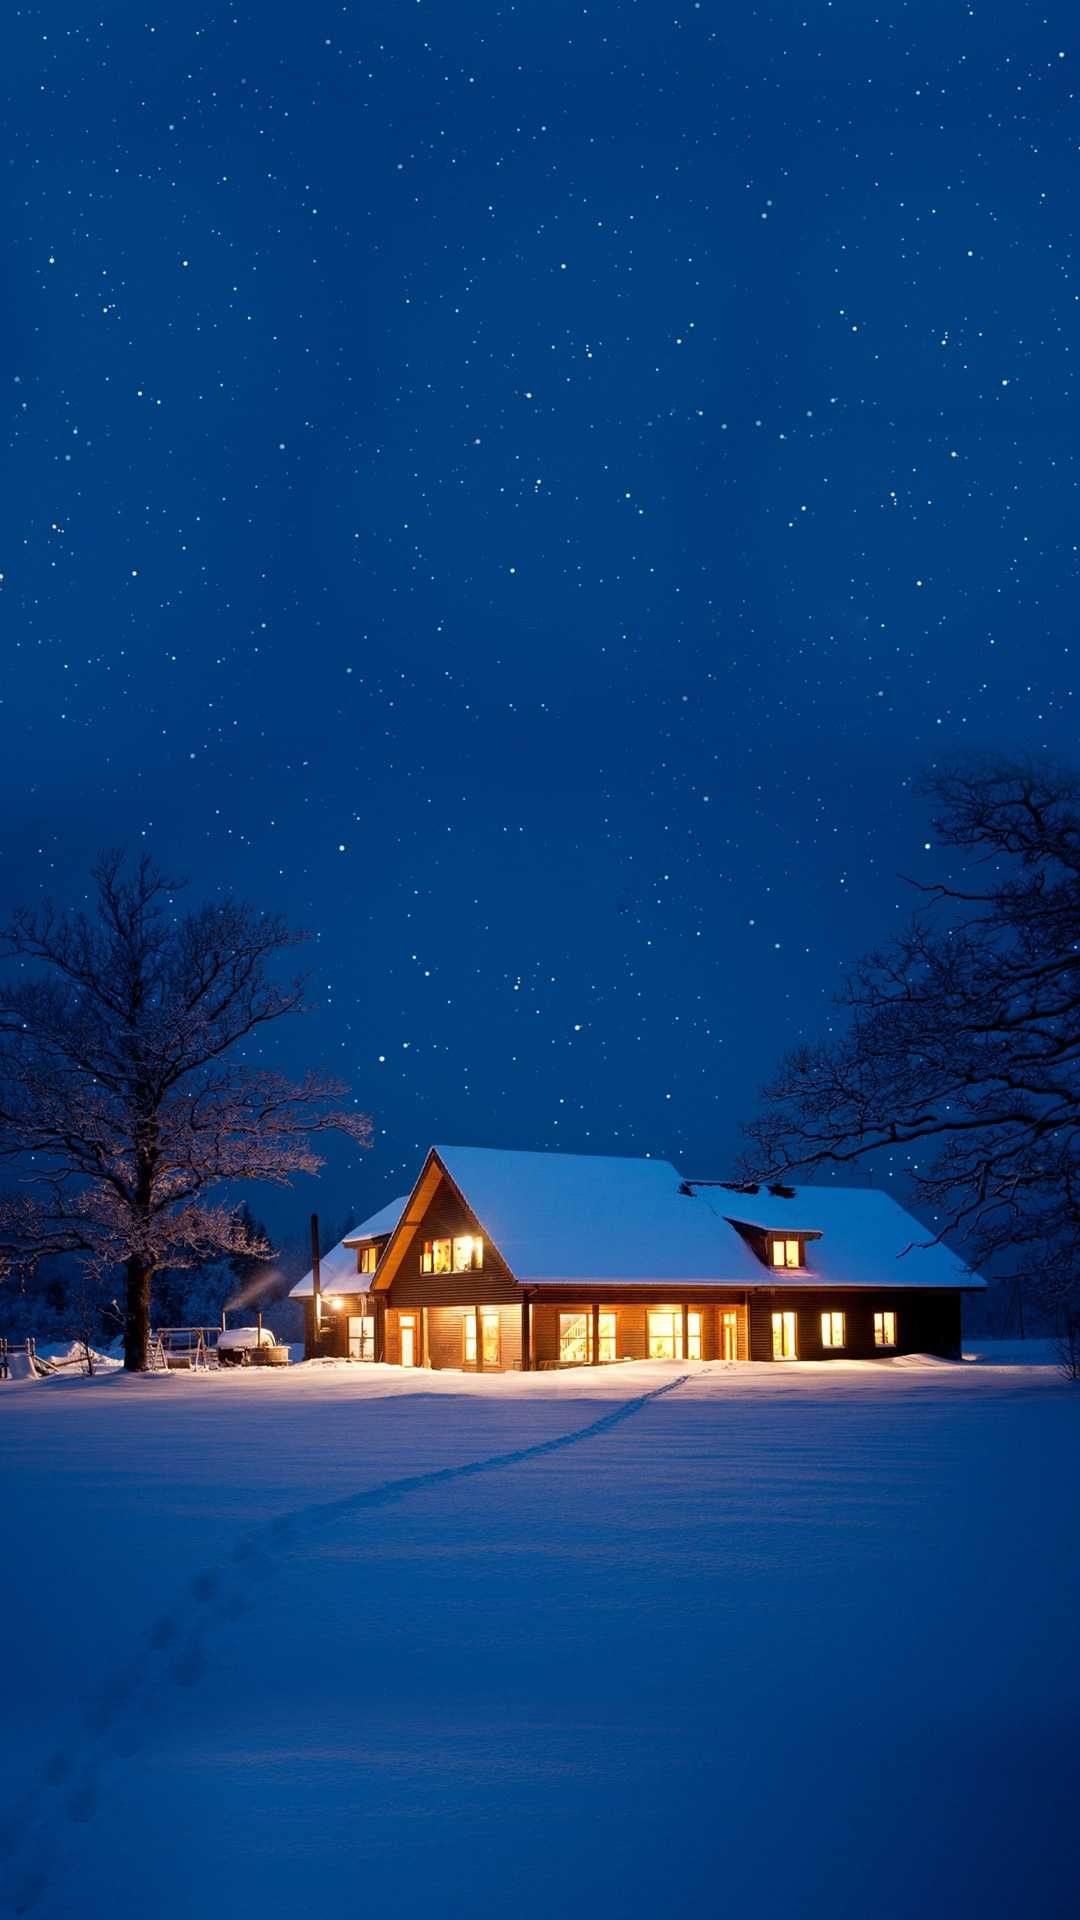 1080x1920 Snow House Christmas Night iPhone Wallpaper. iPhone wallpaper on WallpaperBat